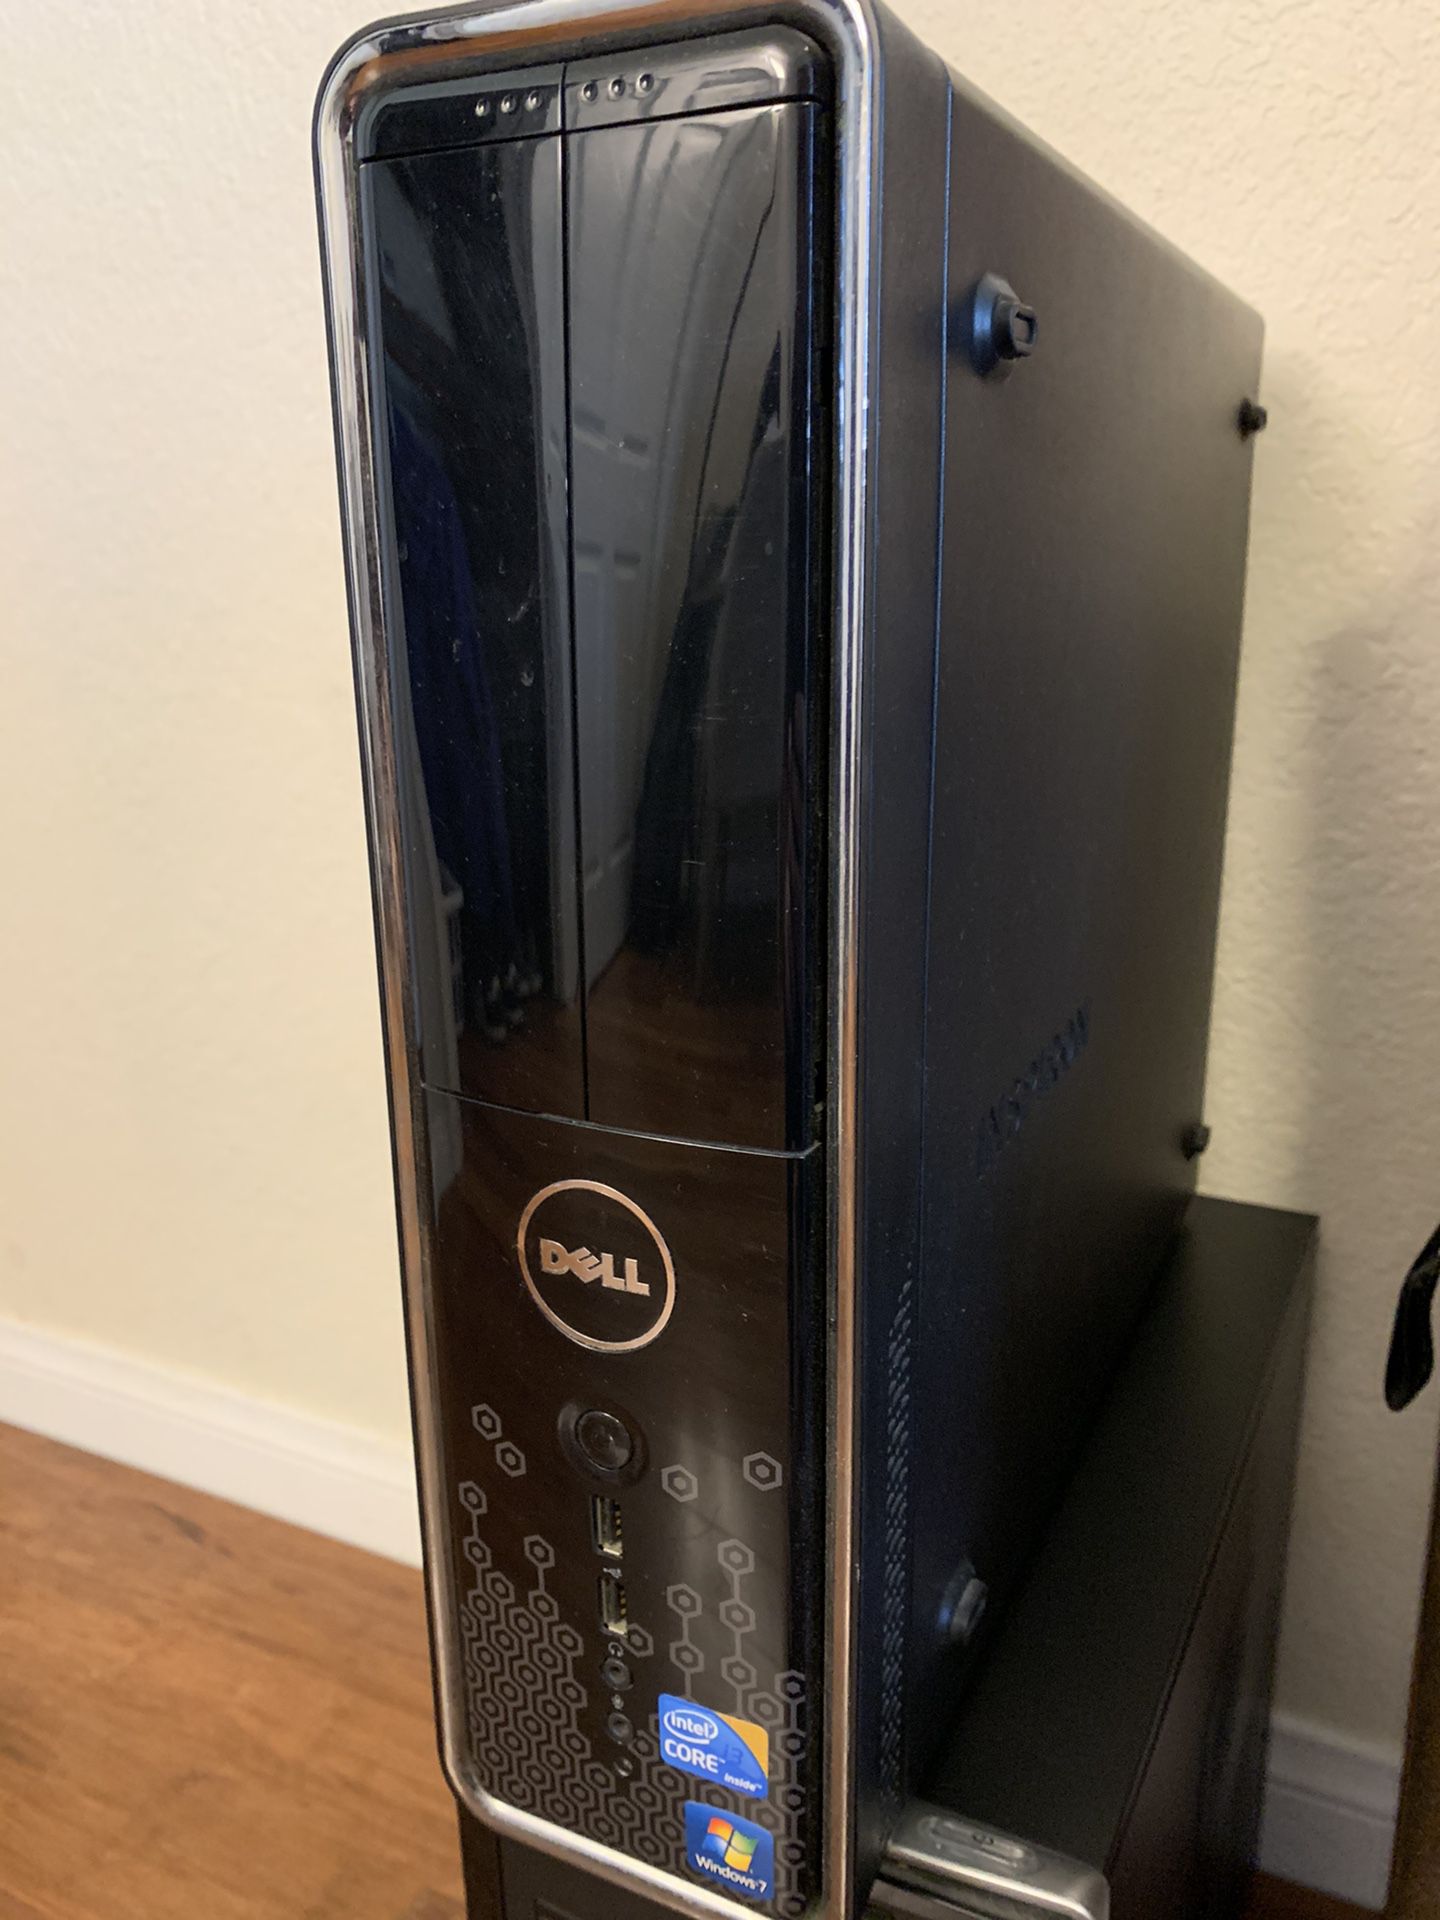 Dell Inspiron 580s Desktop Computer